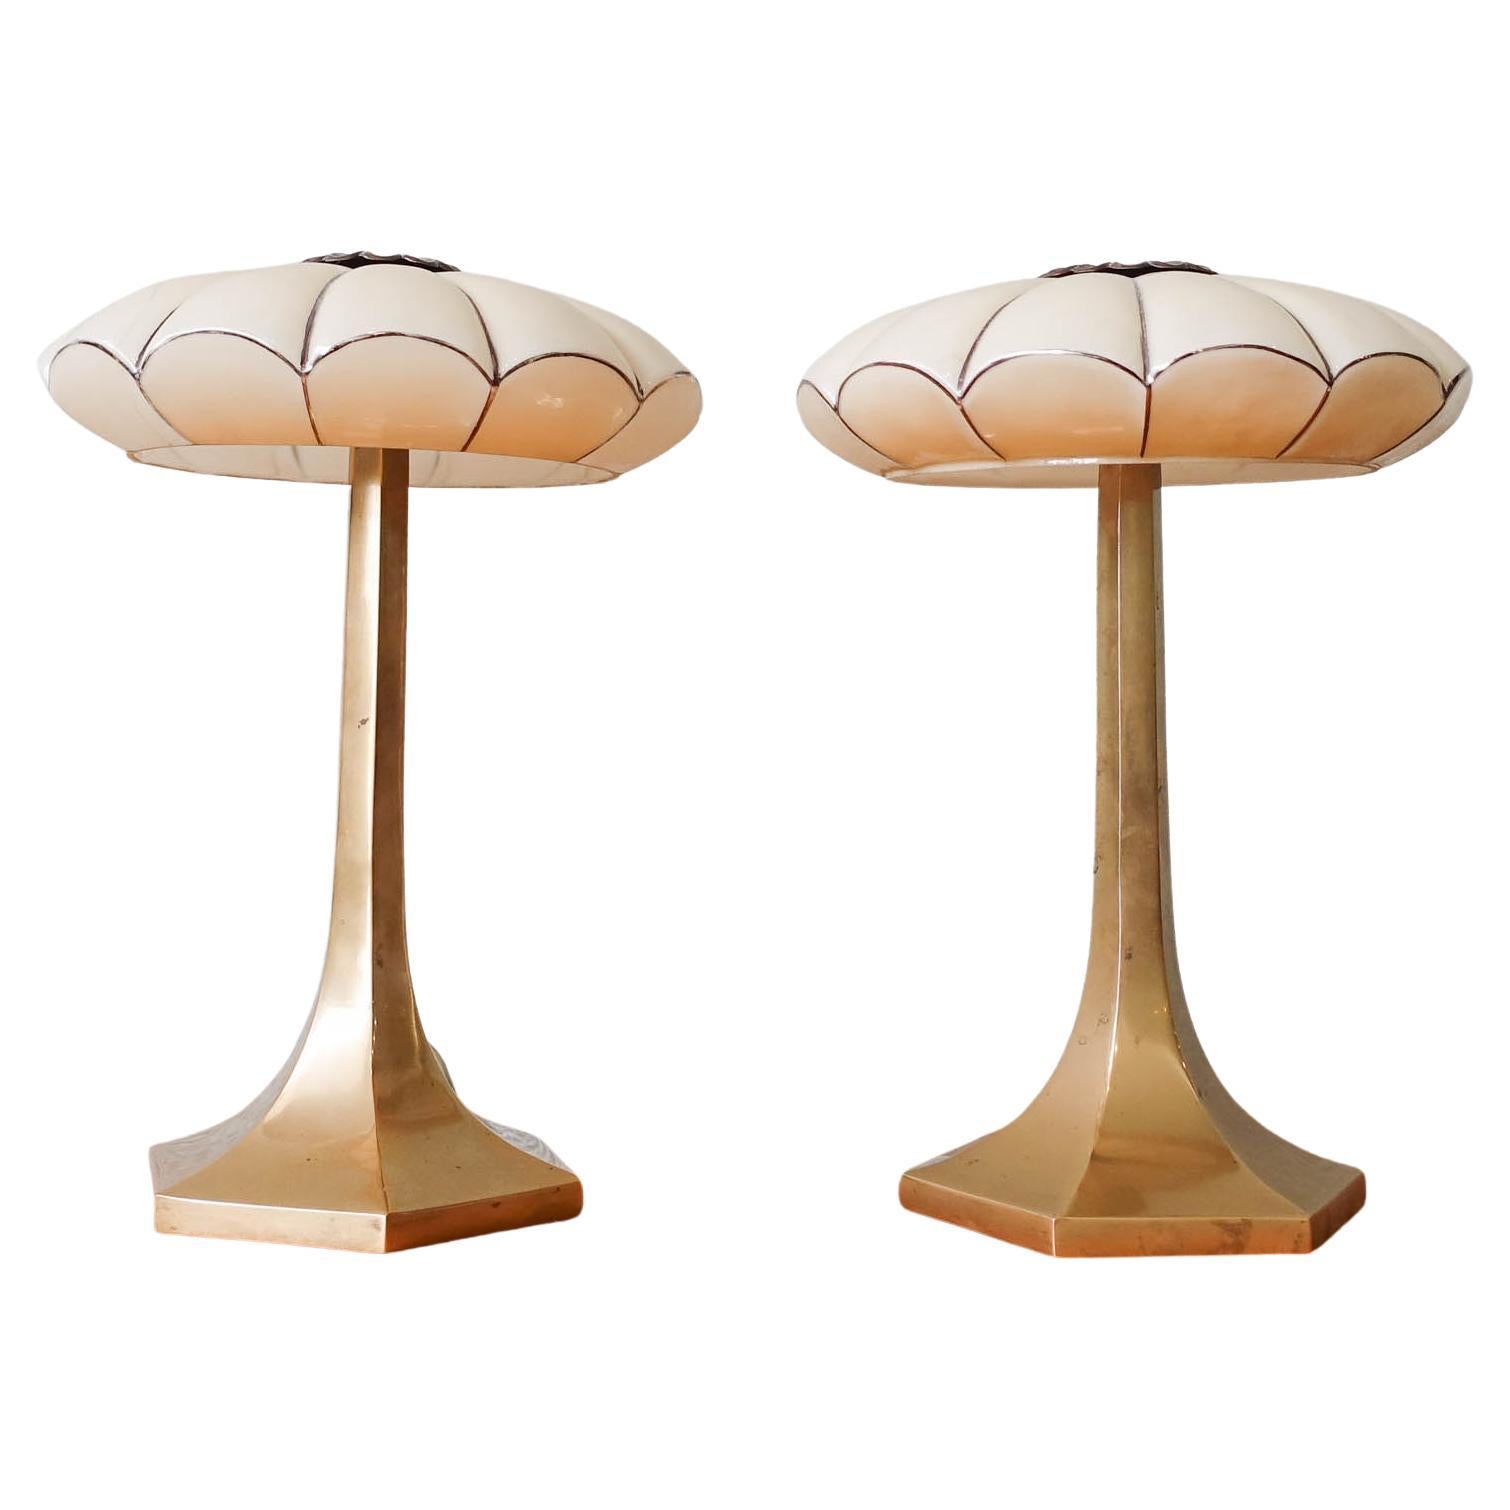 Pair of Art Deco Table Lamps from Josef Hoffman for Wiener Werkstatte, 1930's